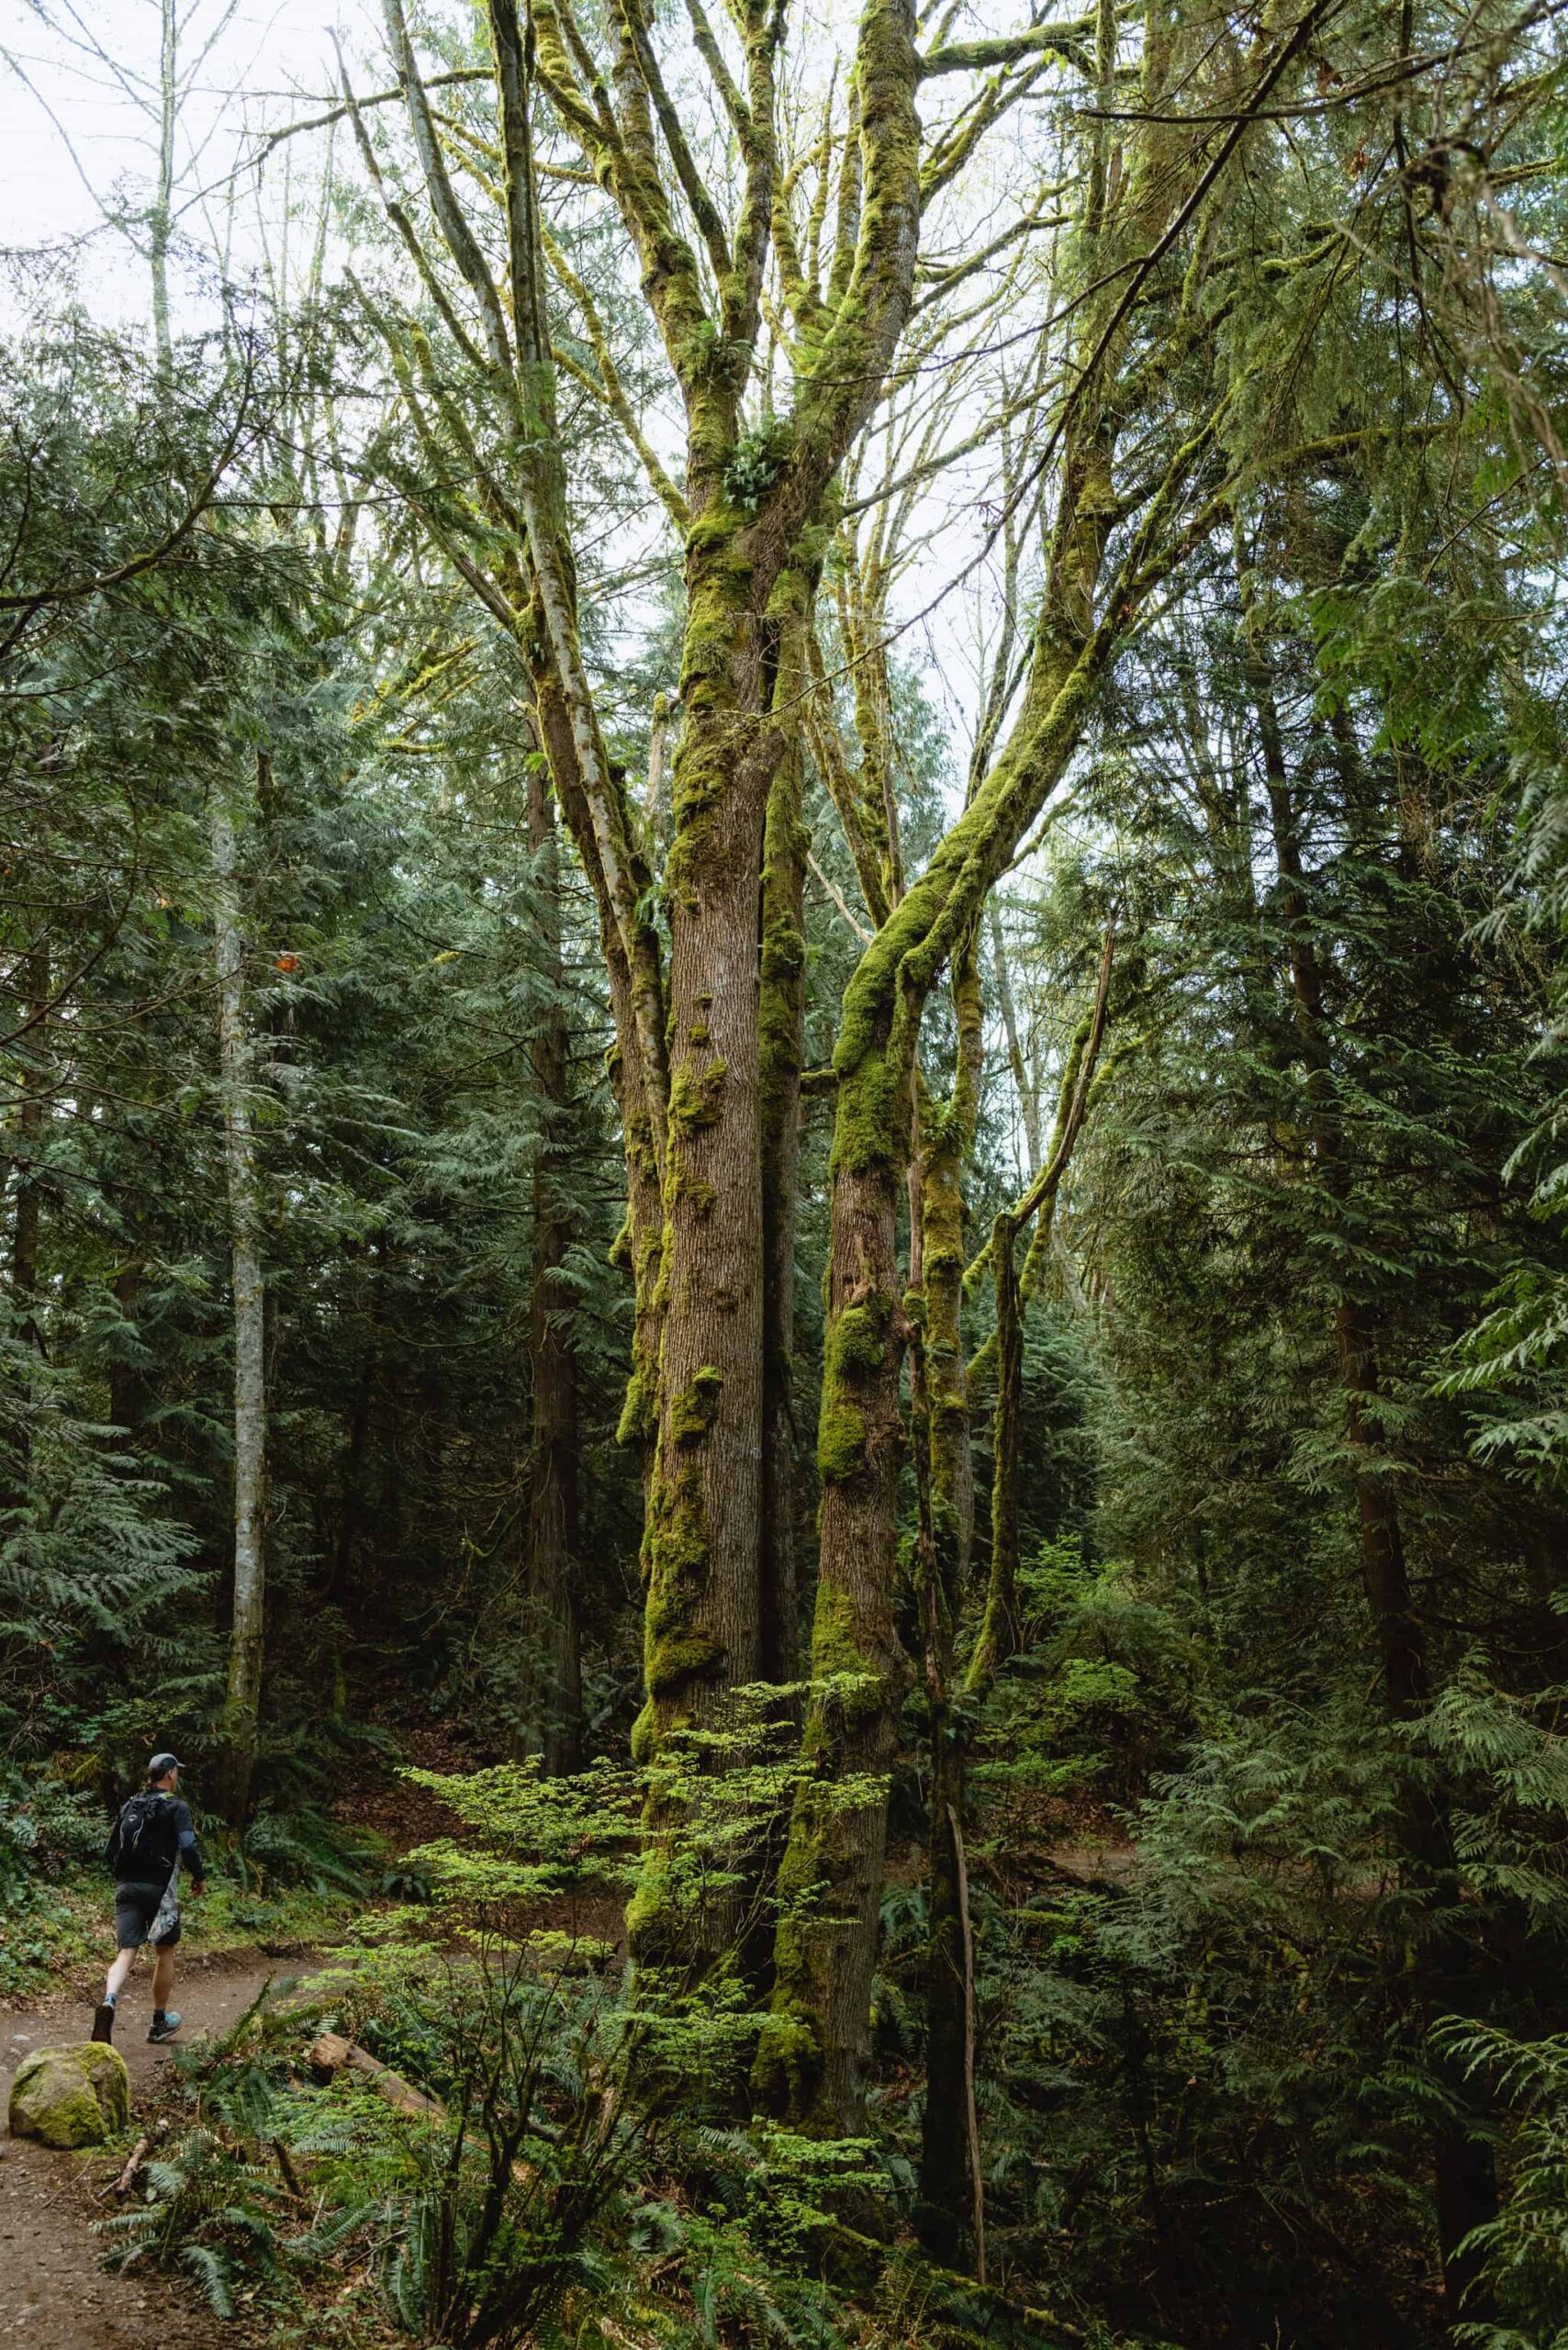 Hiking Trails Near Seattle - Soaring Eagle Regional Park